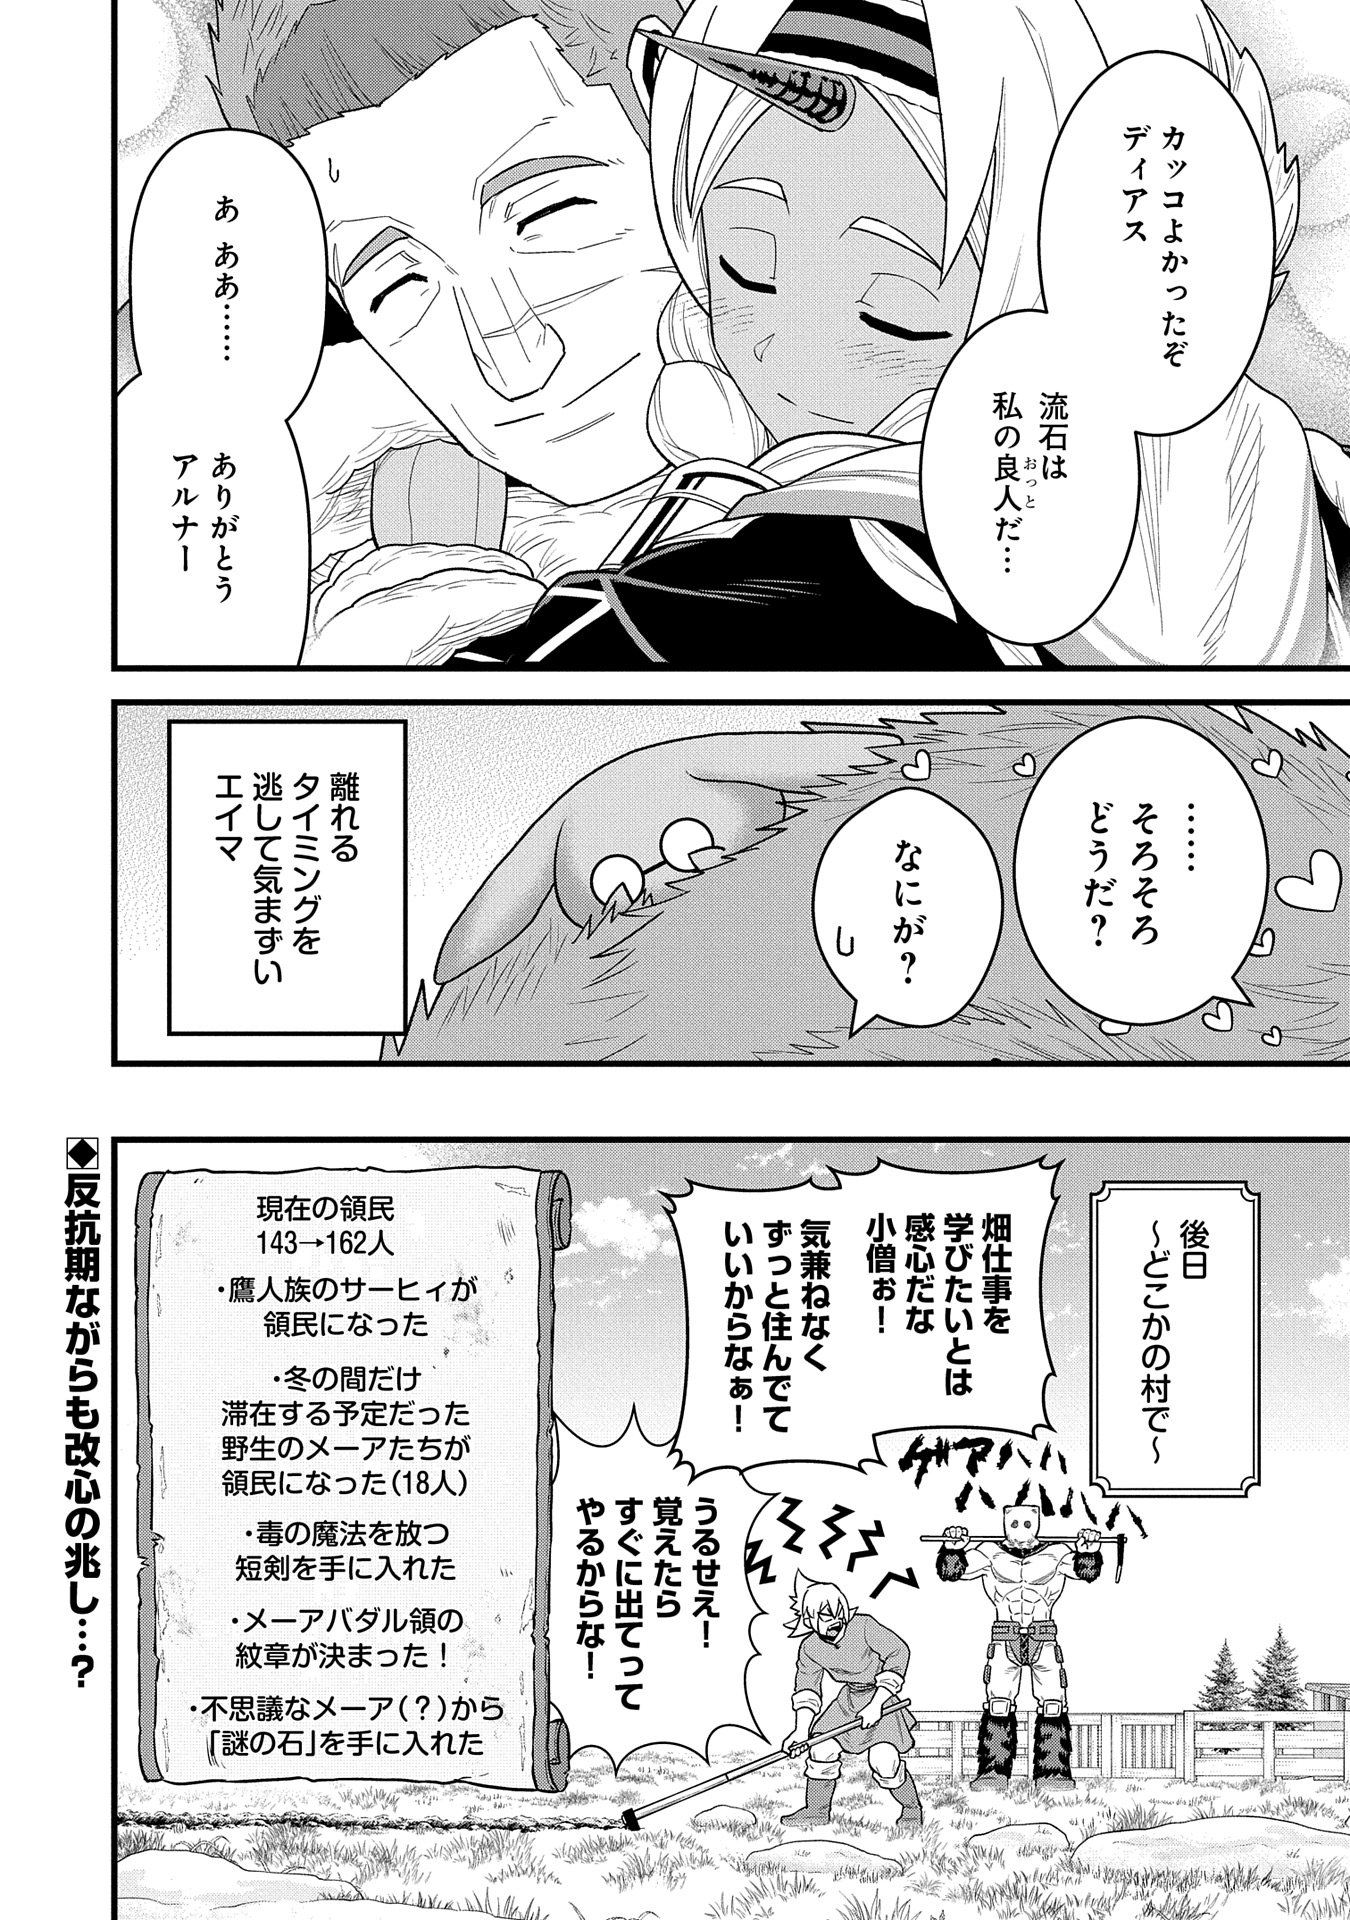 Ryoumin 0-nin Start no Henkyou Ryoushusama - Chapter 55 - Page 32